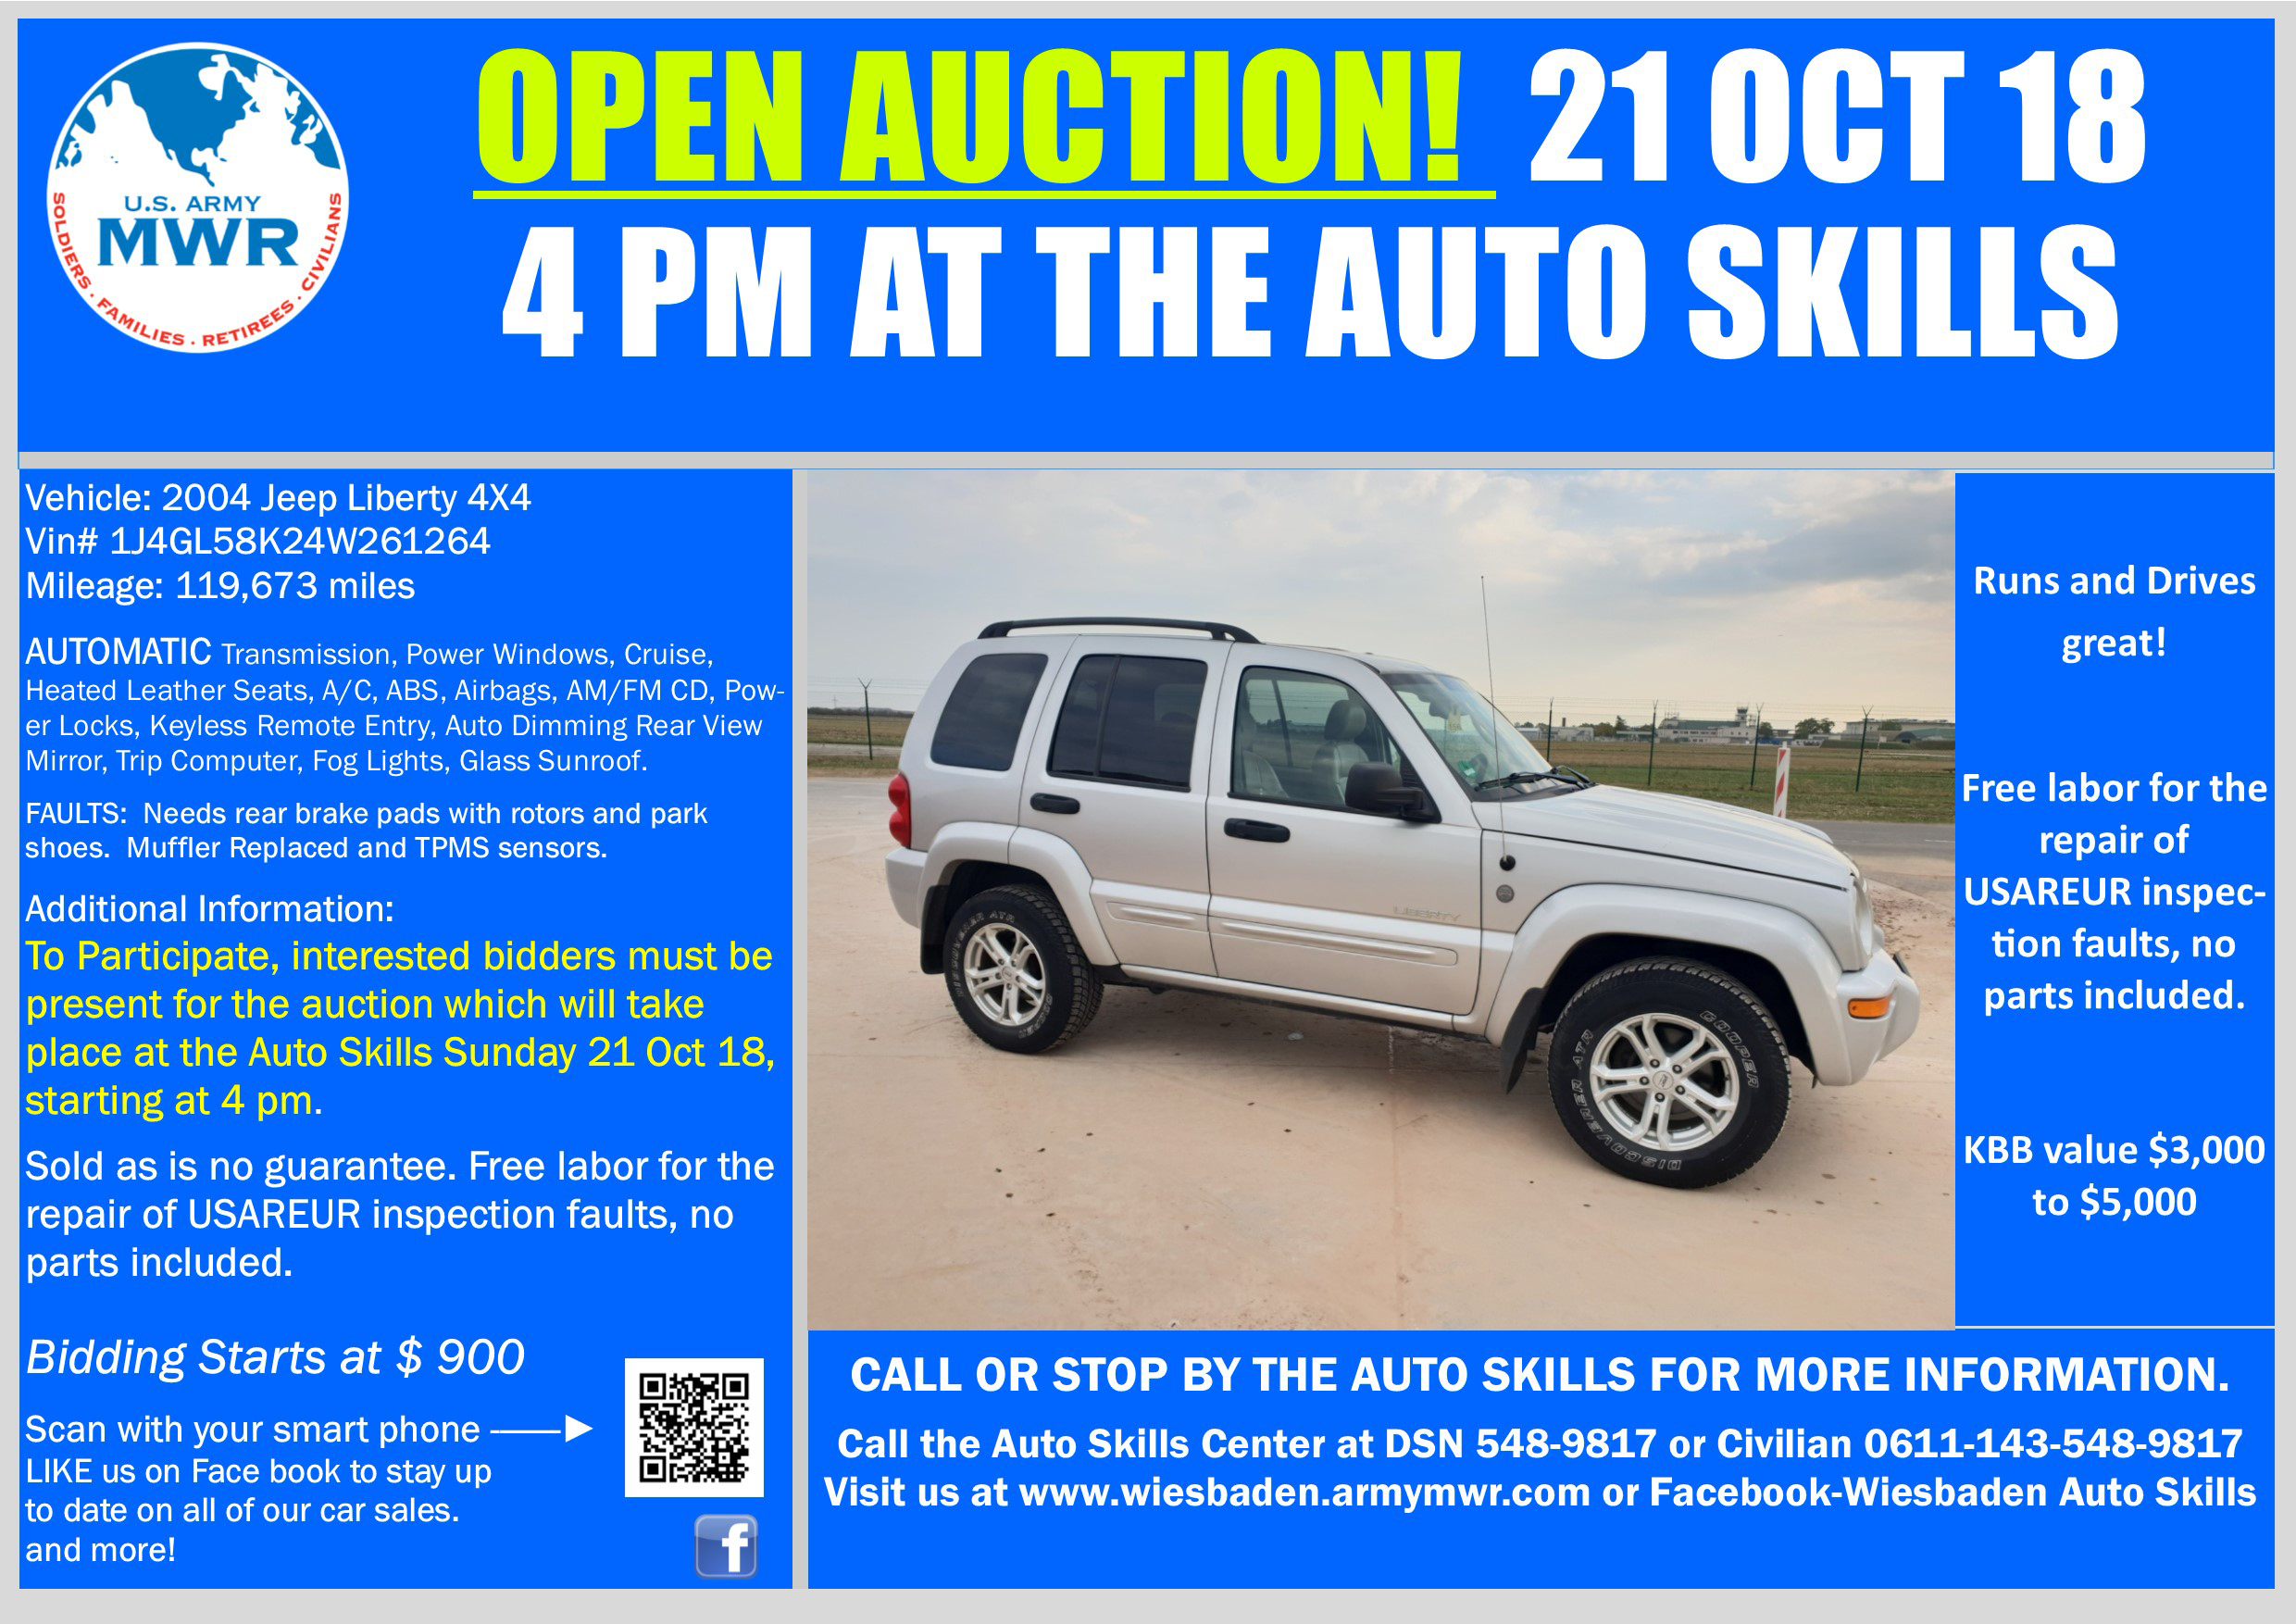 Sale Jeep Liberty  21 Oct  18 Open Auction.jpg